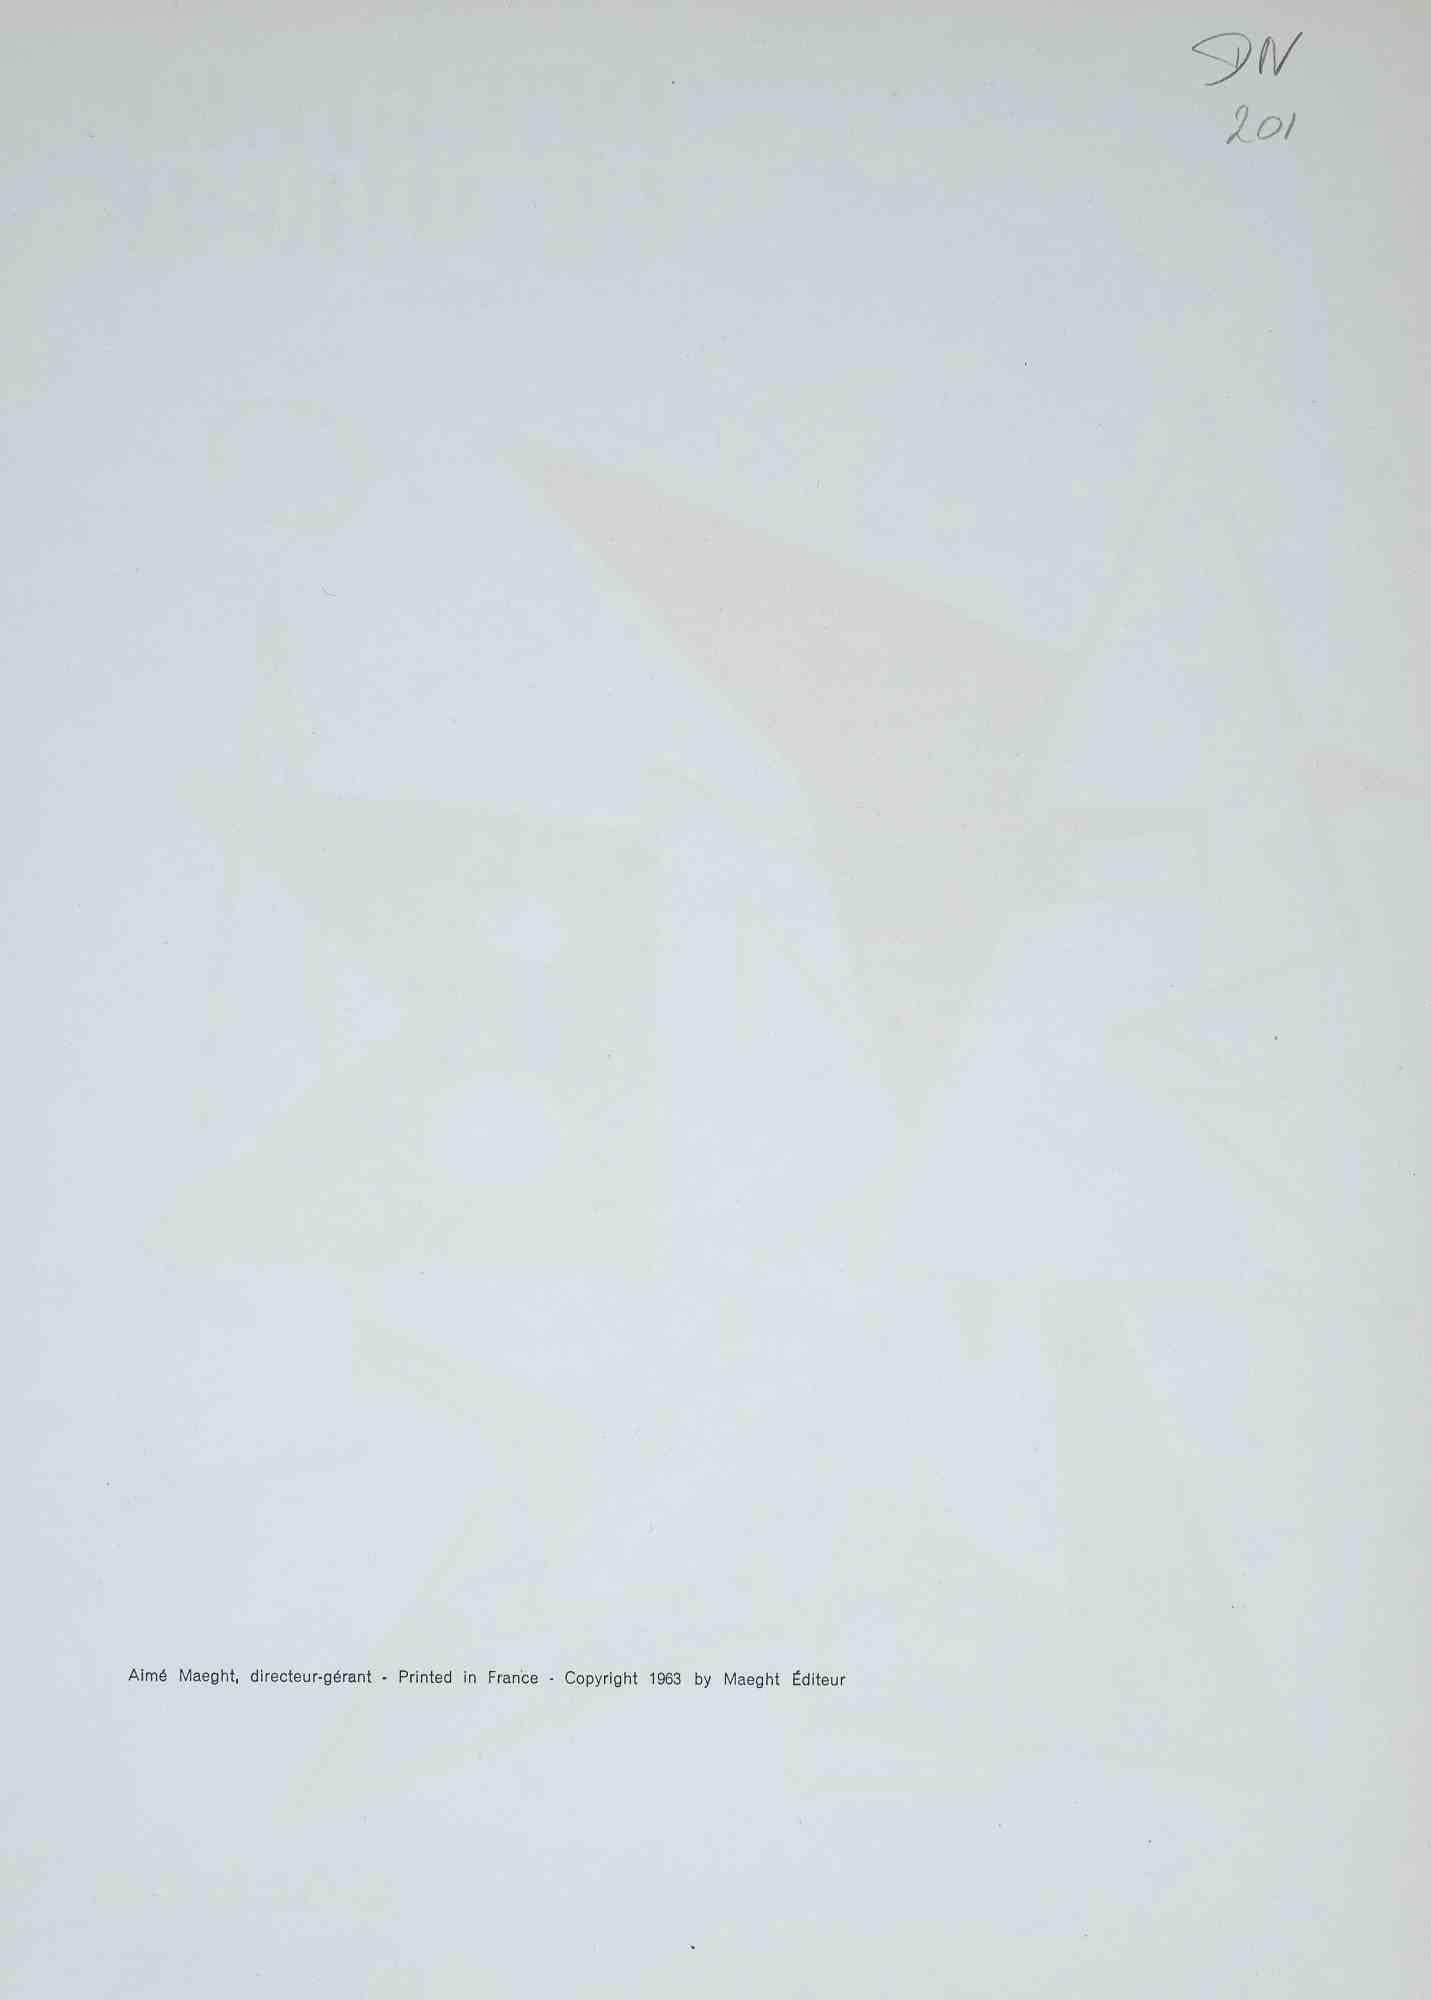 Cover for Derriere Le Miroir - Lithograph by Alexander Calder - 1963 1